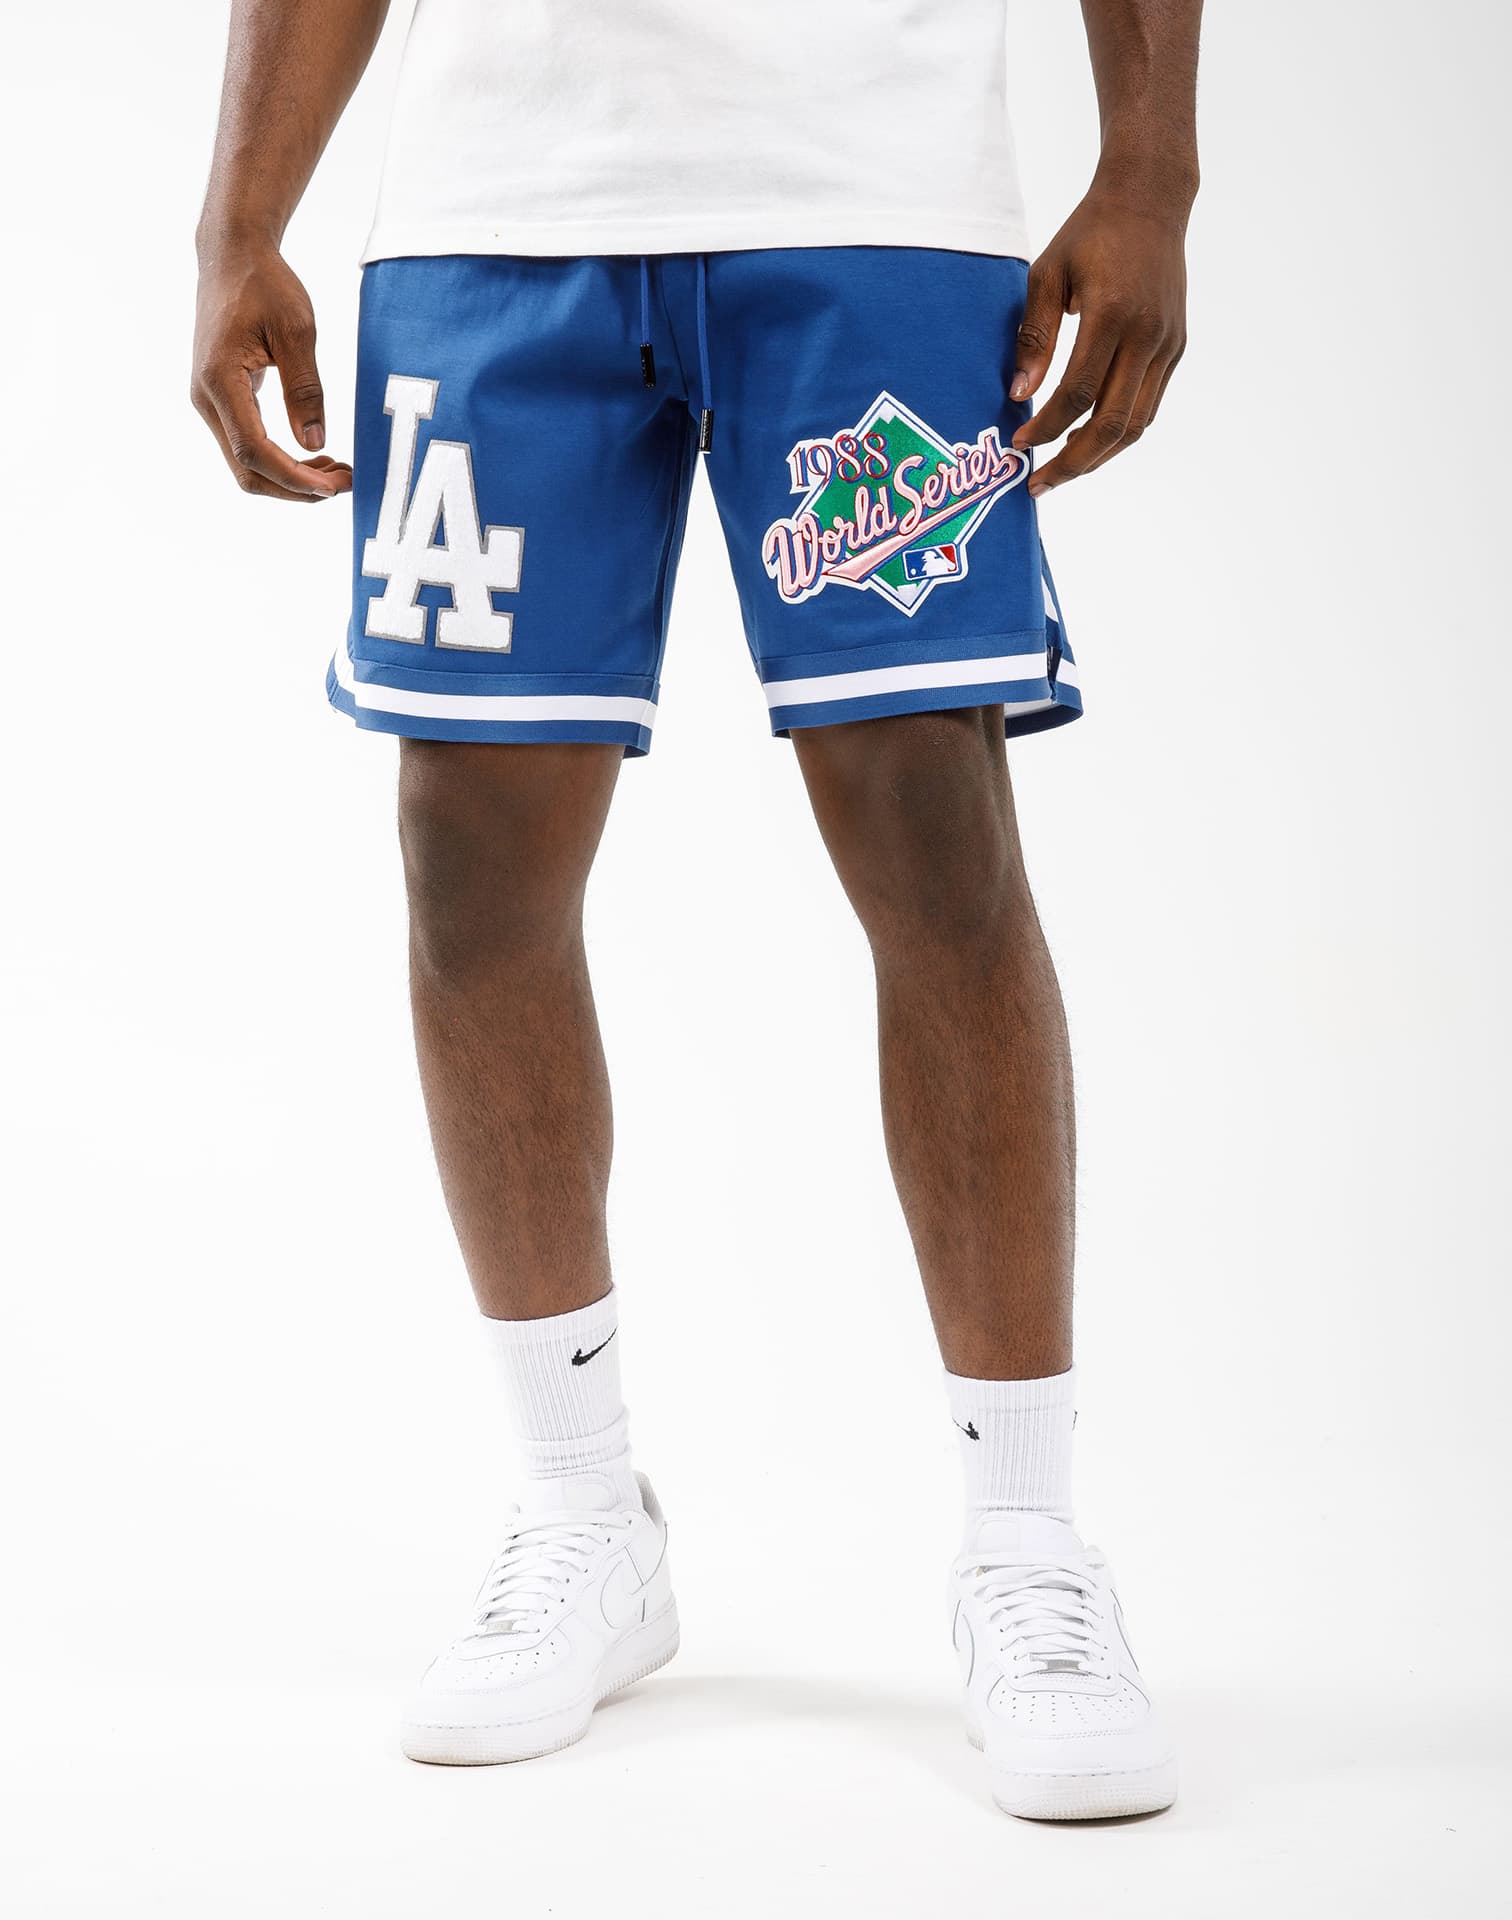 Nike Statement Ballgame (MLB Los Angeles Dodgers) Men's Shorts